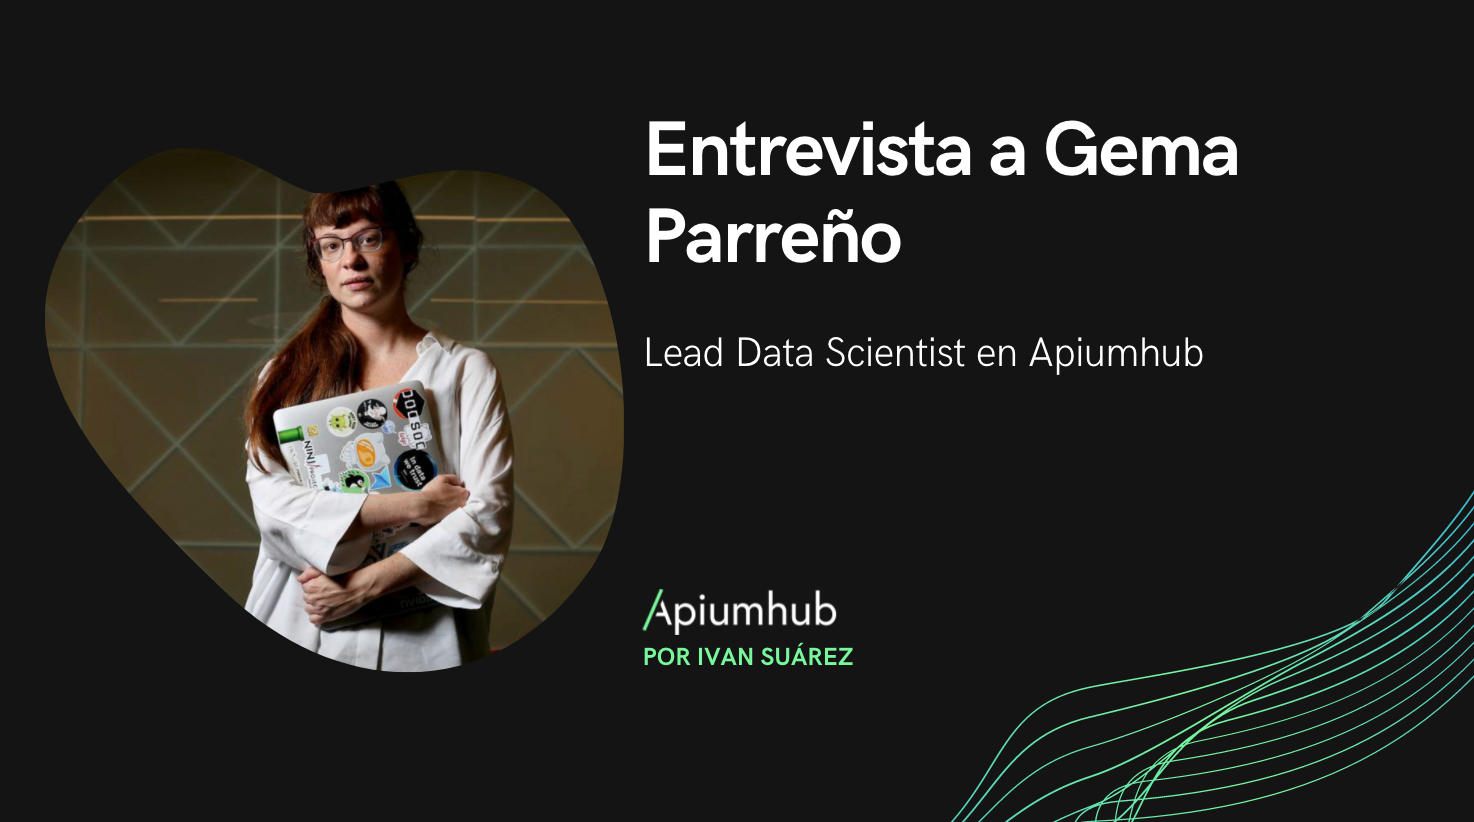 Entrevista a Gema Parreño, Lead Data Scientist en Apiumhub